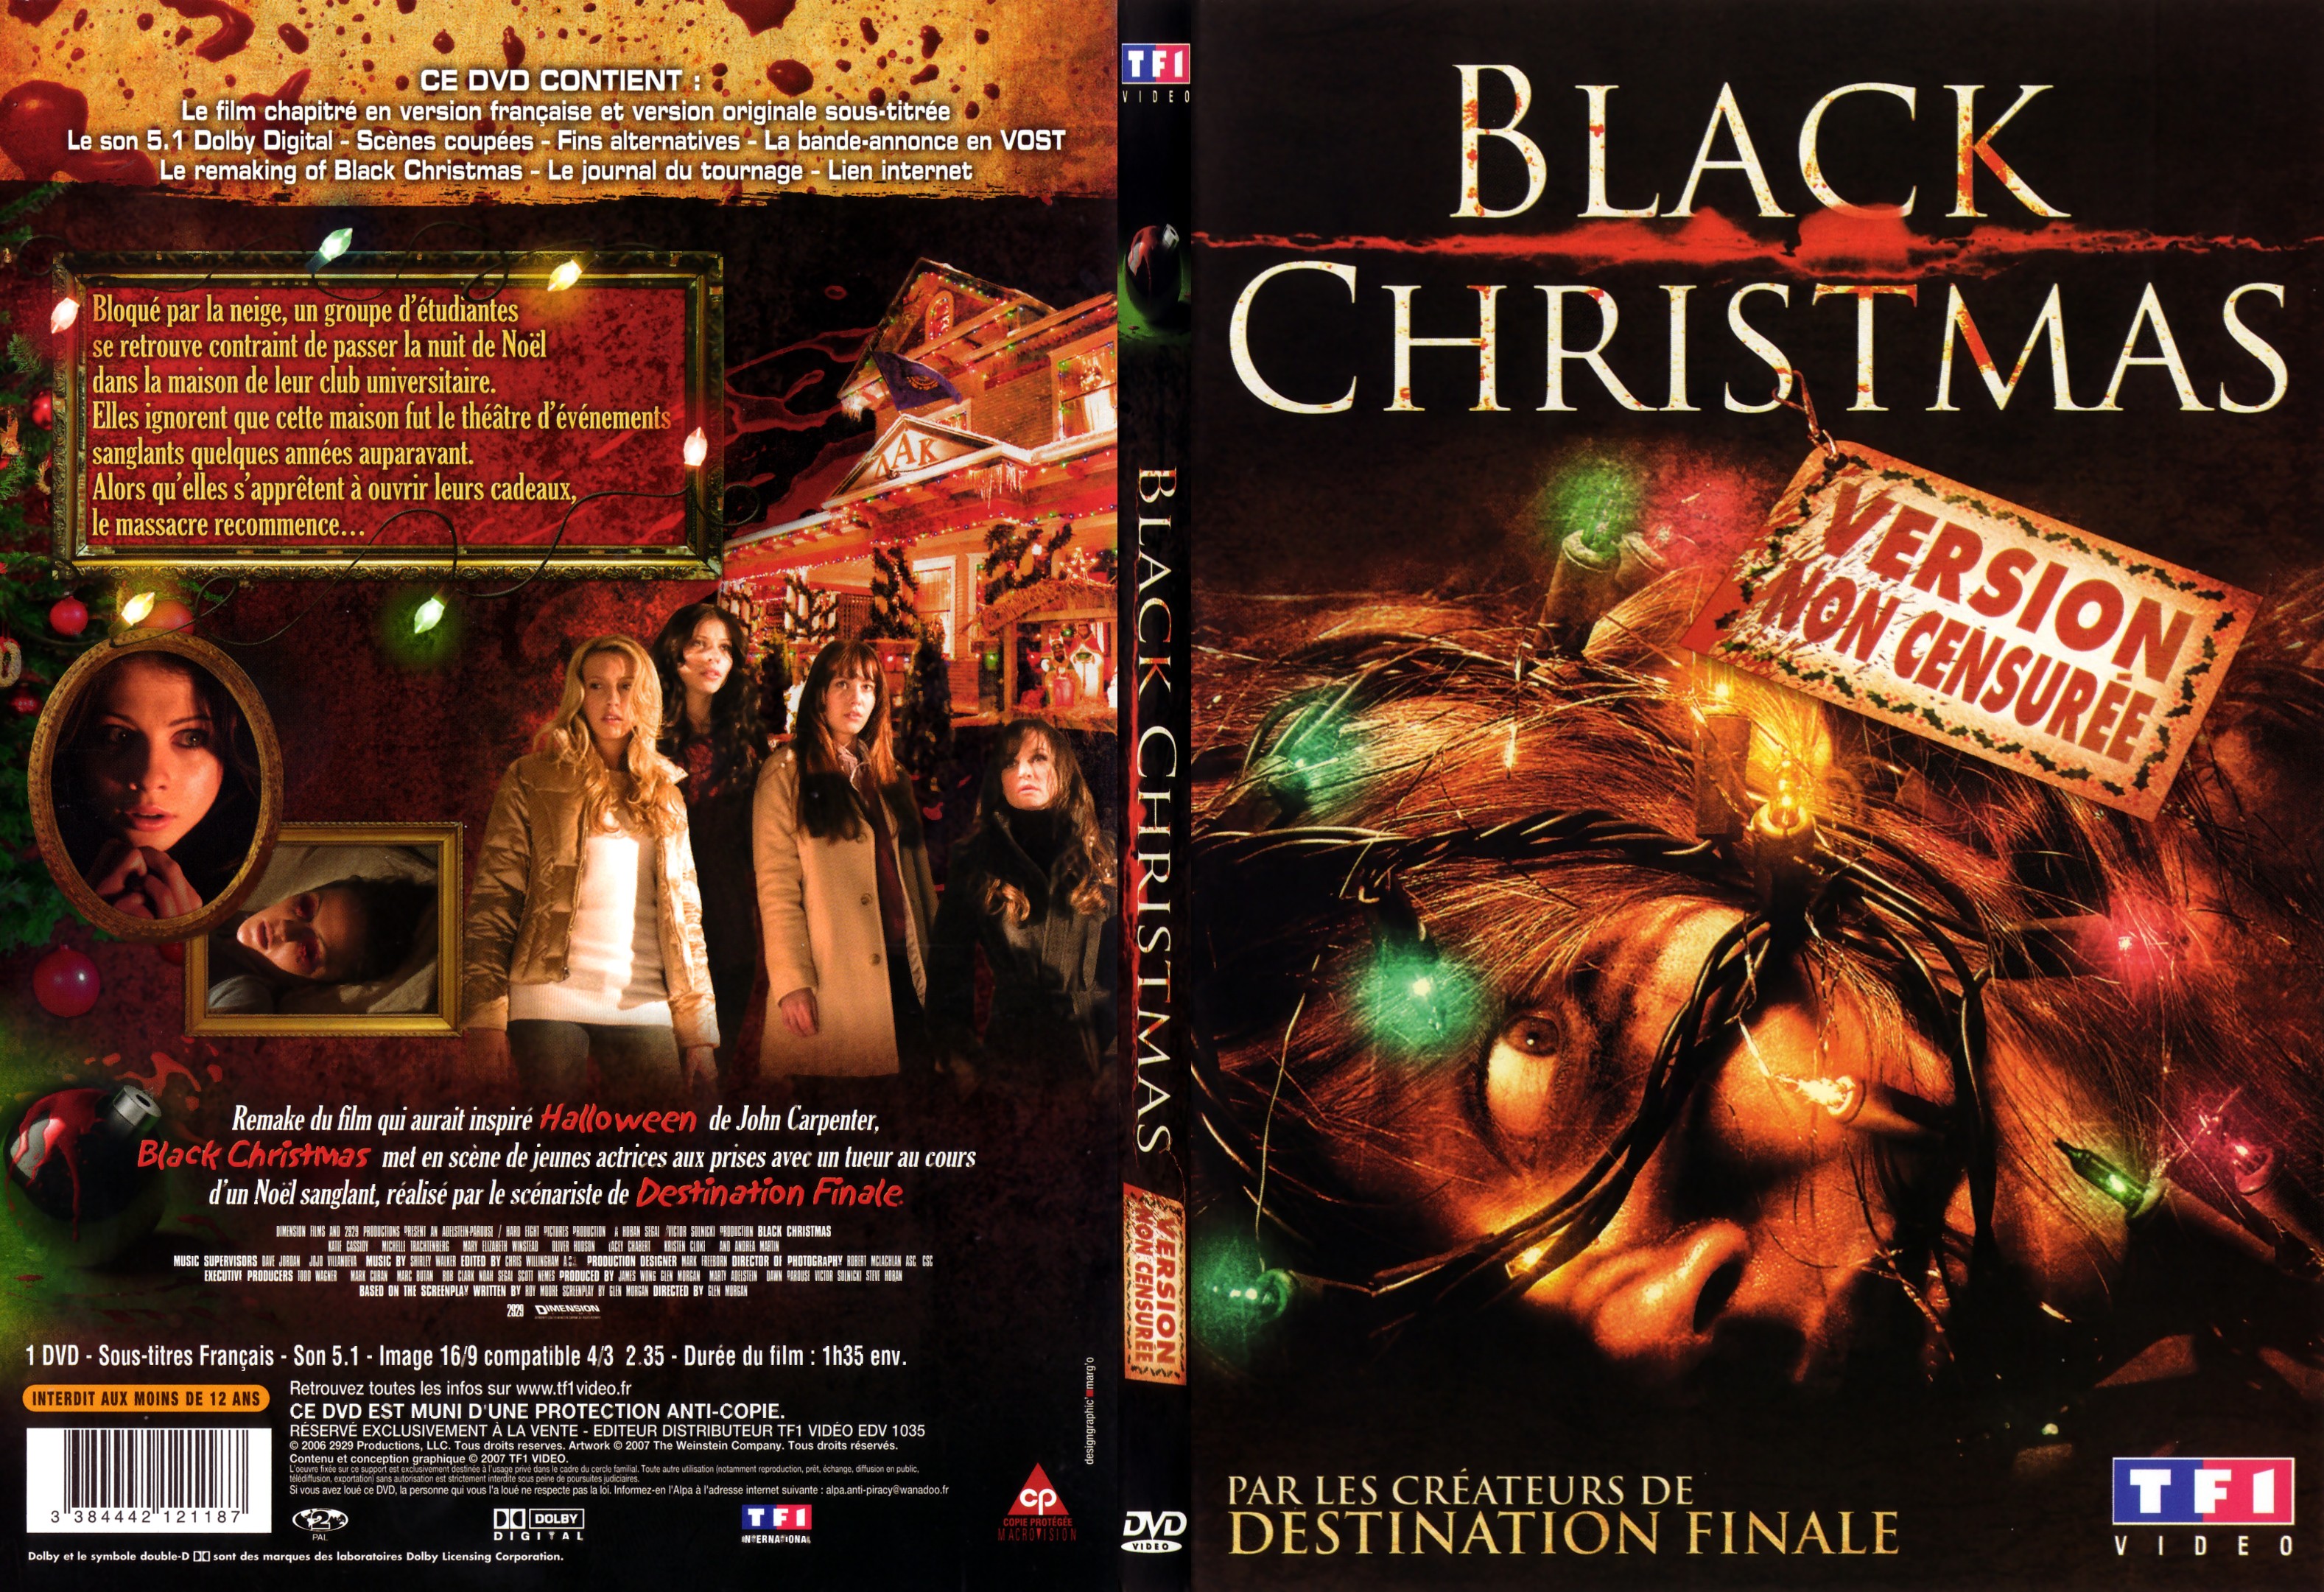 Jaquette DVD Black Christmas - SLIM v2